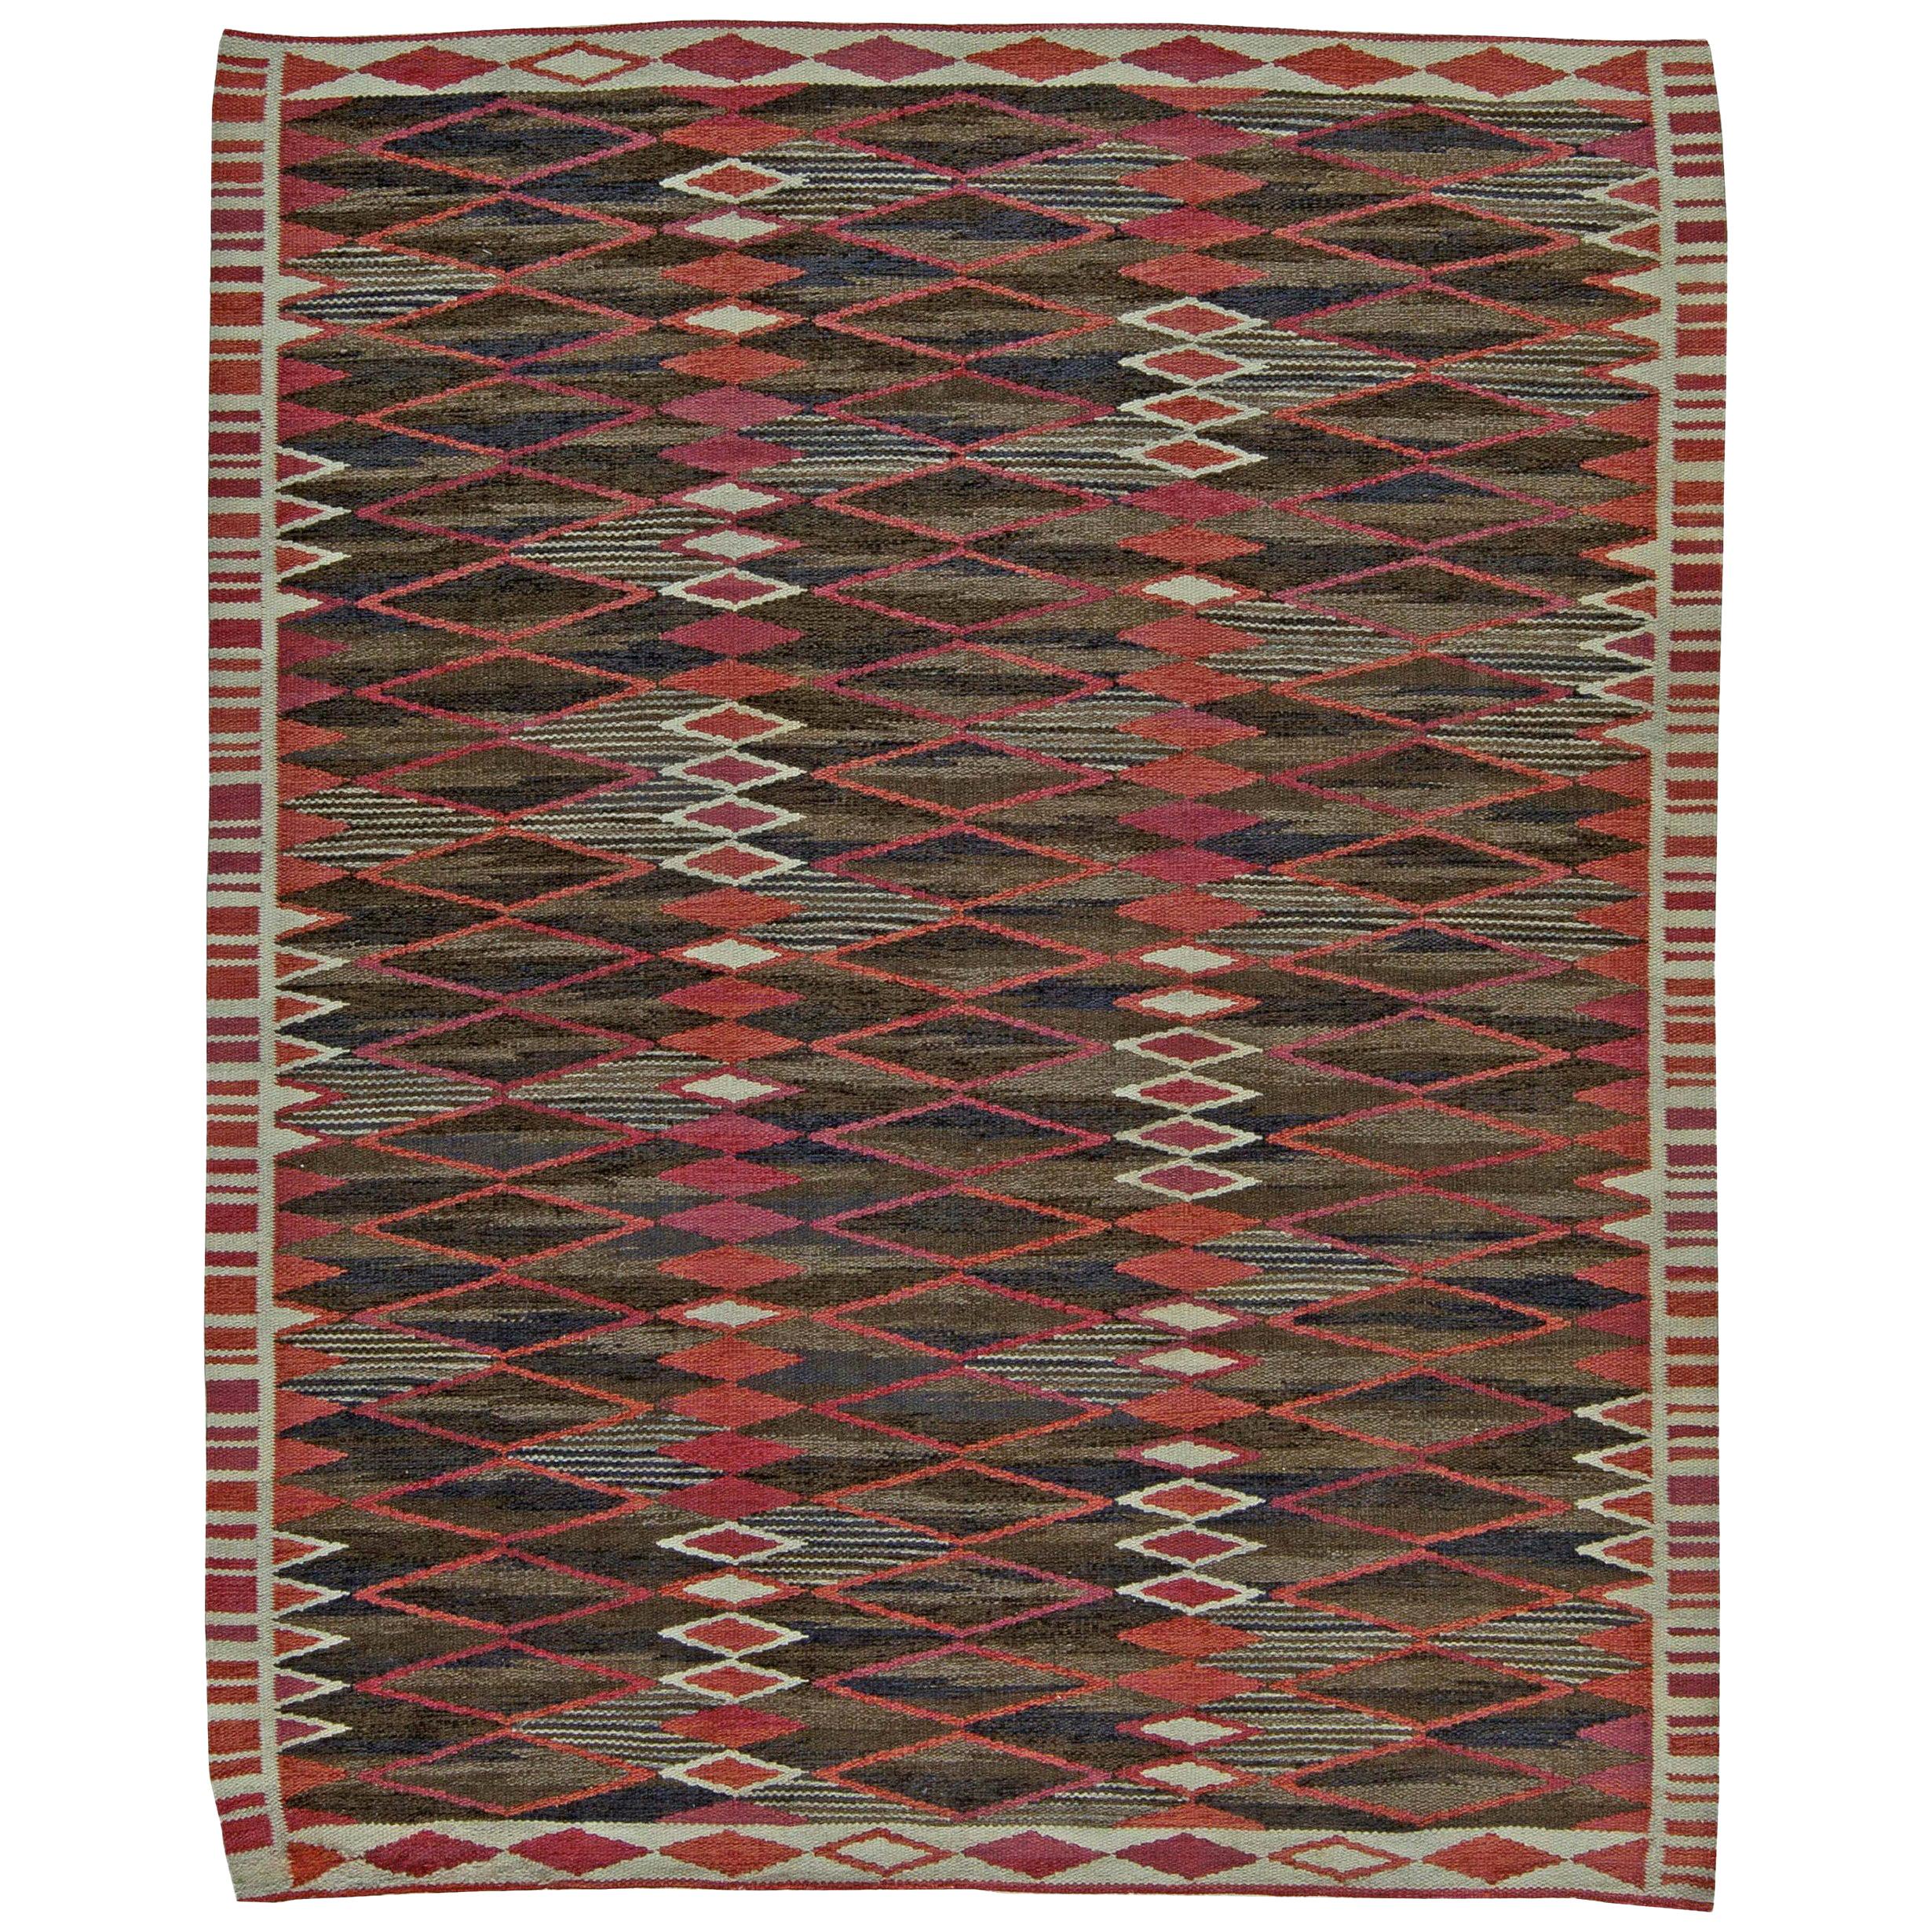 Mid-20th century Swedish Geometric Red, Brown, Blue, White Flat-Weave Wool Rug